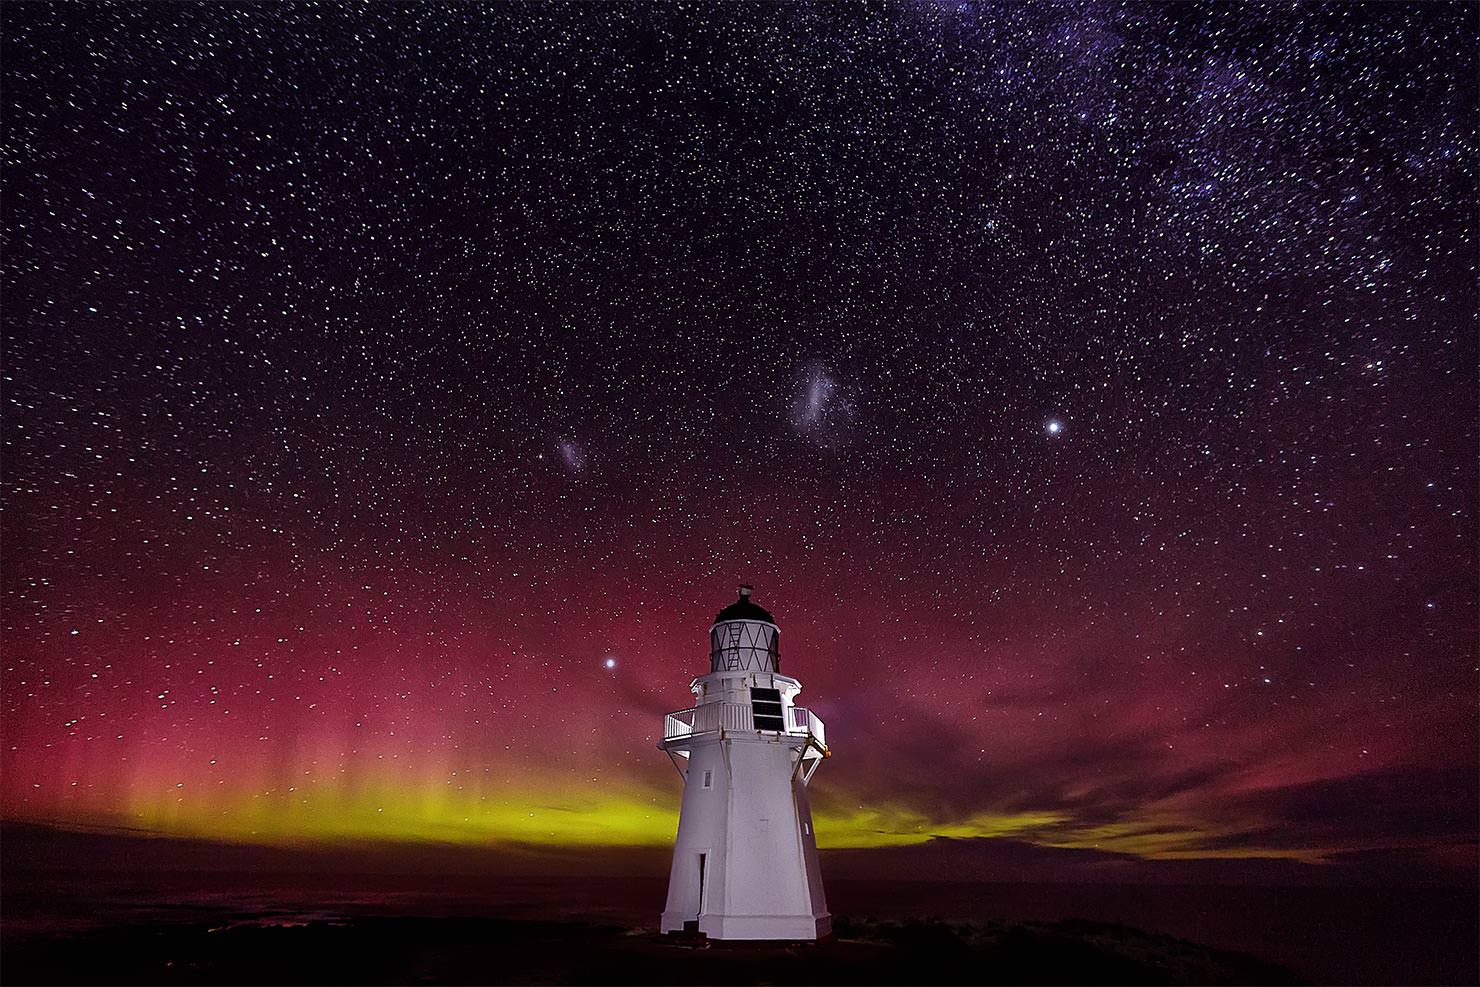 Southern Lights Aurora Australis Waipapa Lighthouse 3 Night Sky Photography New Zealand Milky Way Star Shooting Paul Reiffer Professional Landscape Photographer